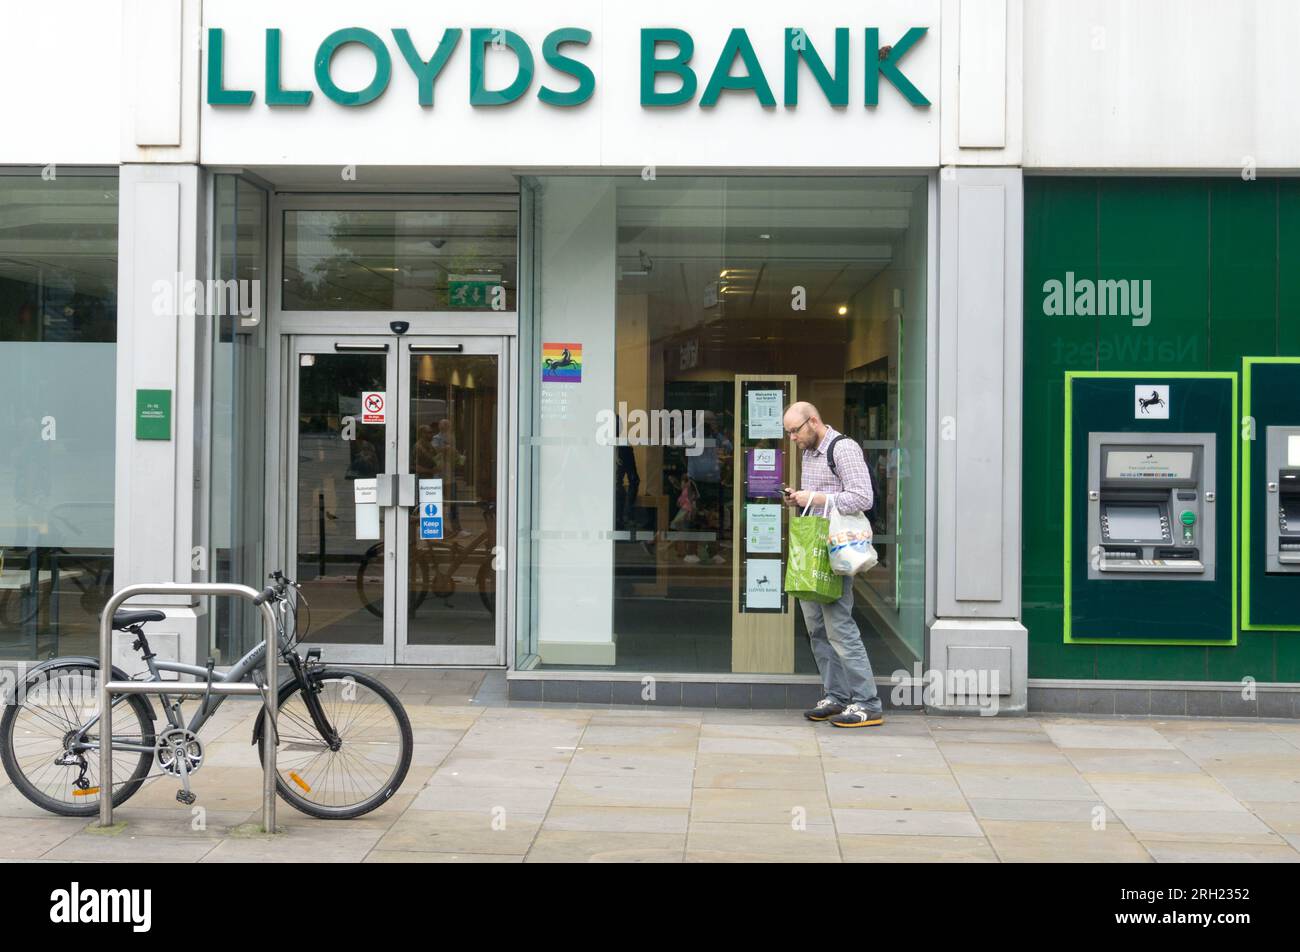 Lloyds bank branch in Hammersmith, London, UK Stock Photo